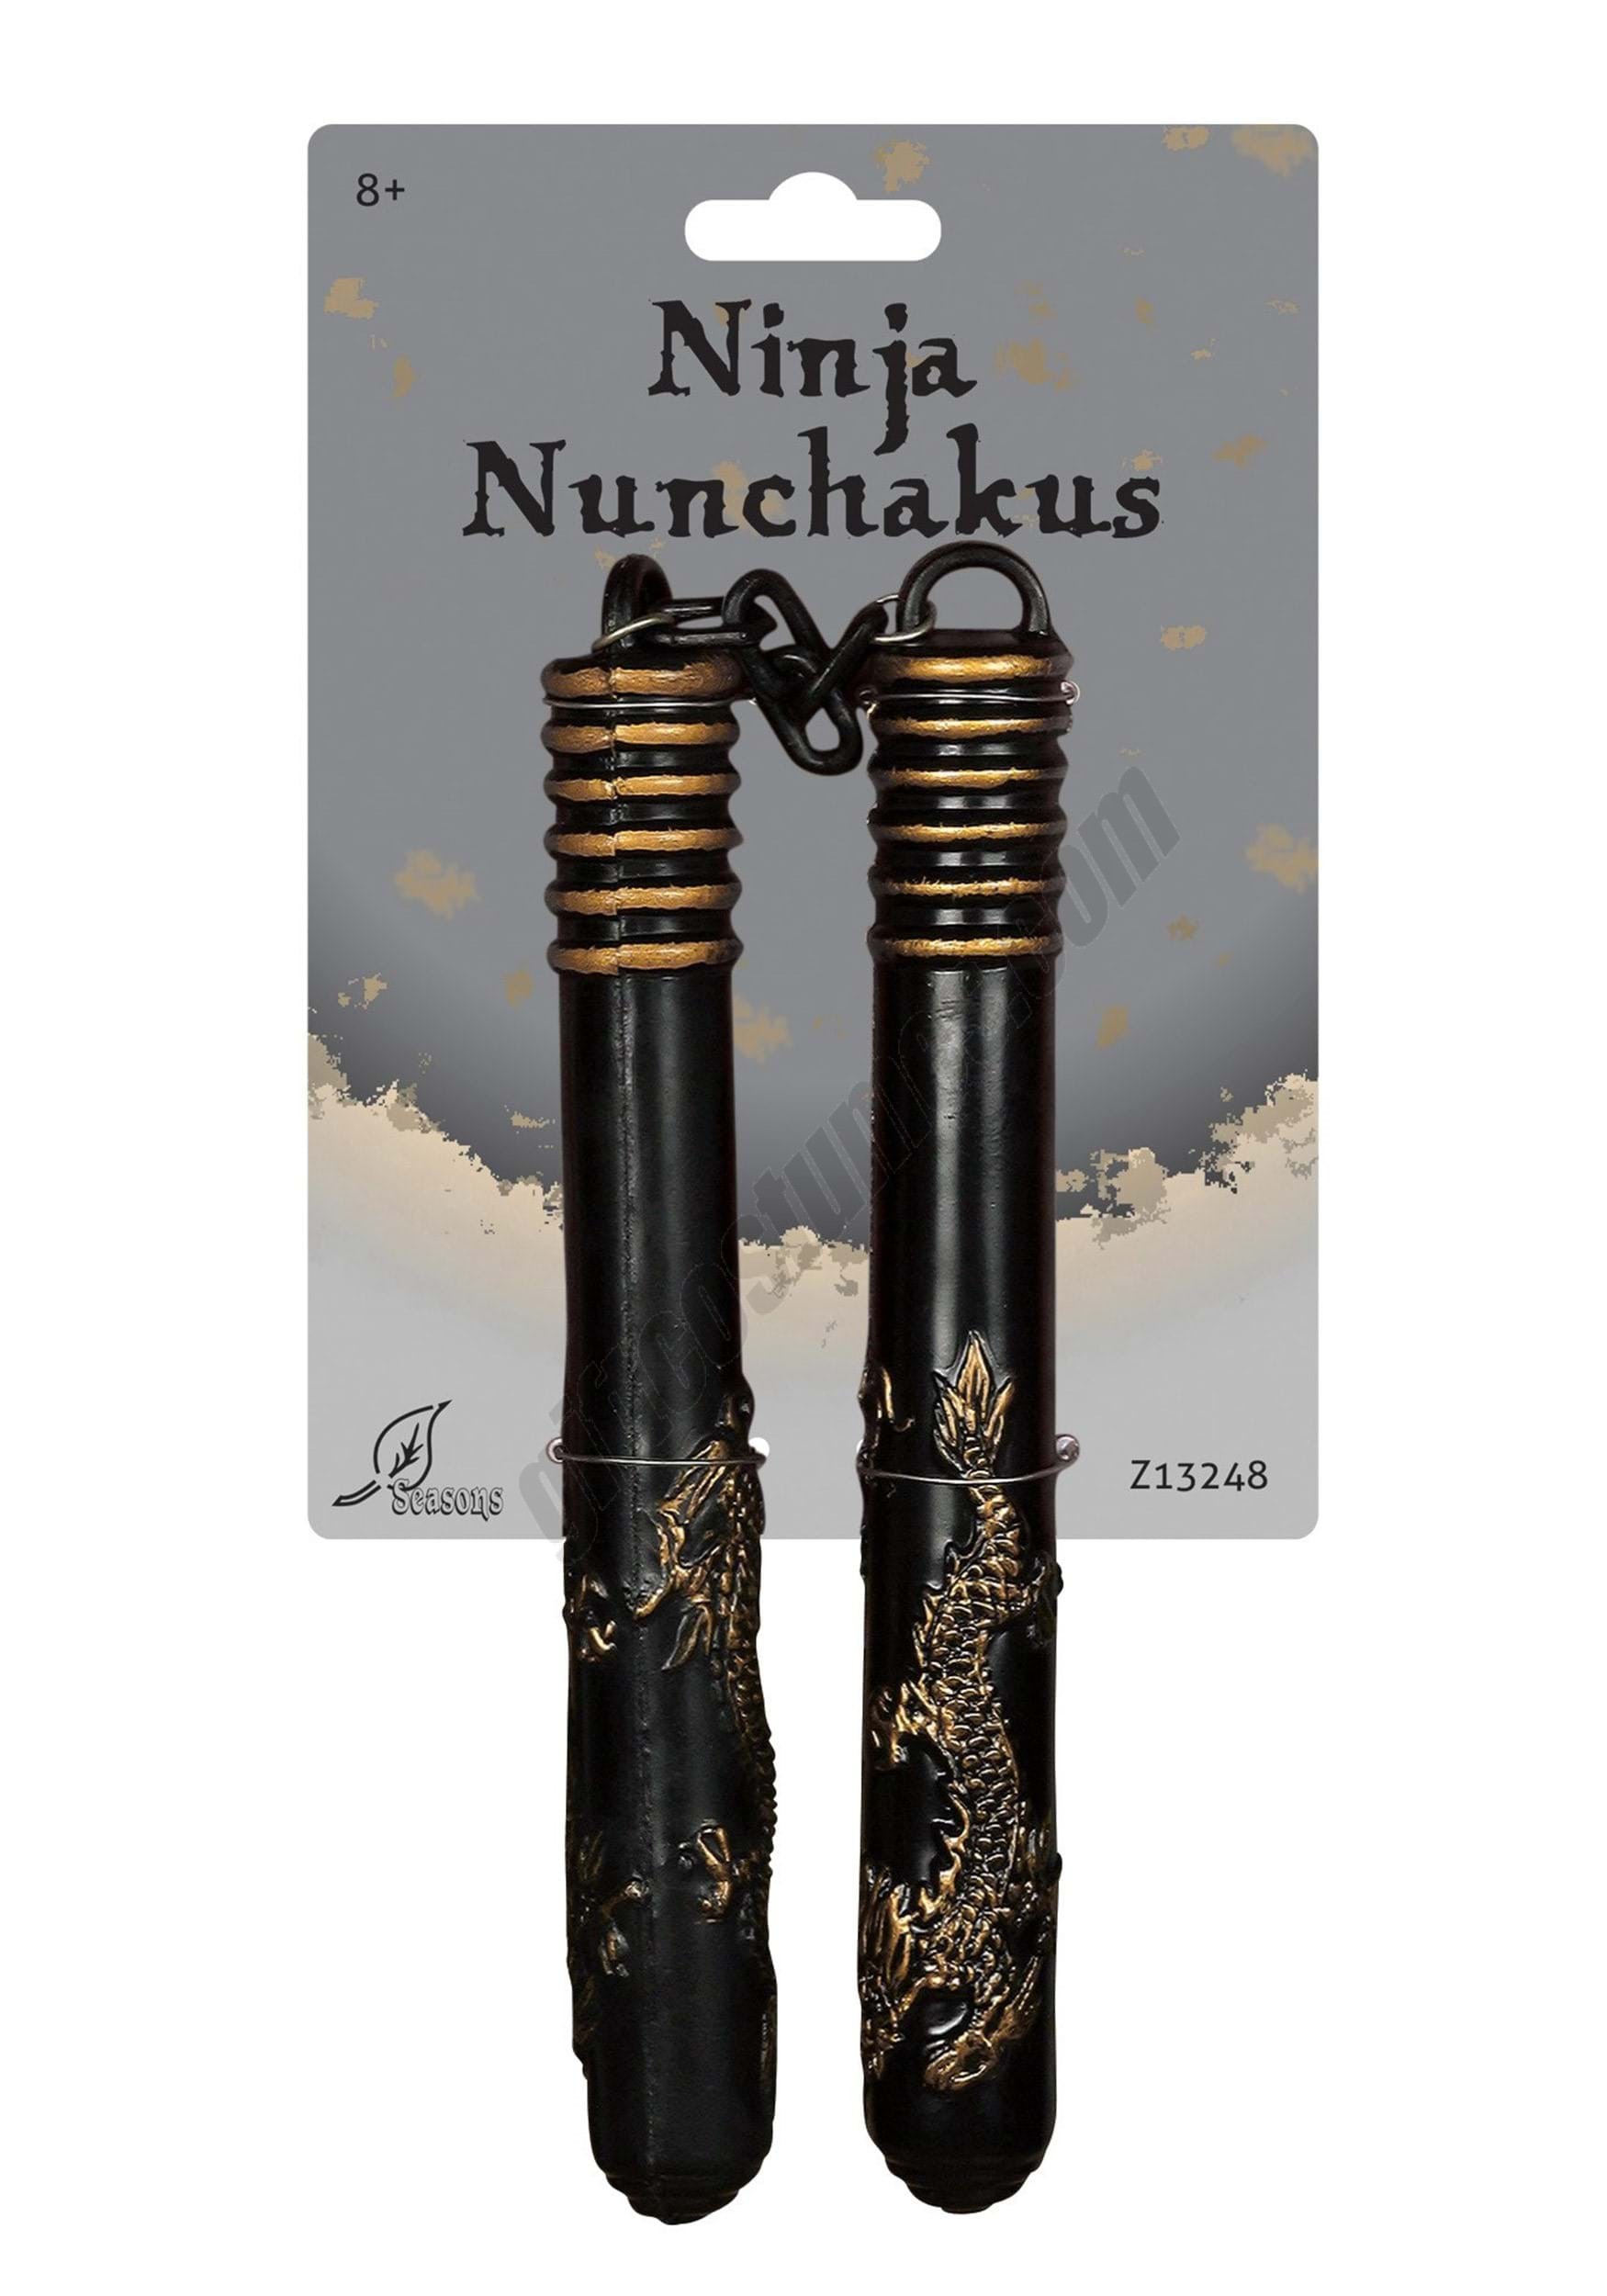 Ninja Nunchakus Promotions - Ninja Nunchakus Promotions